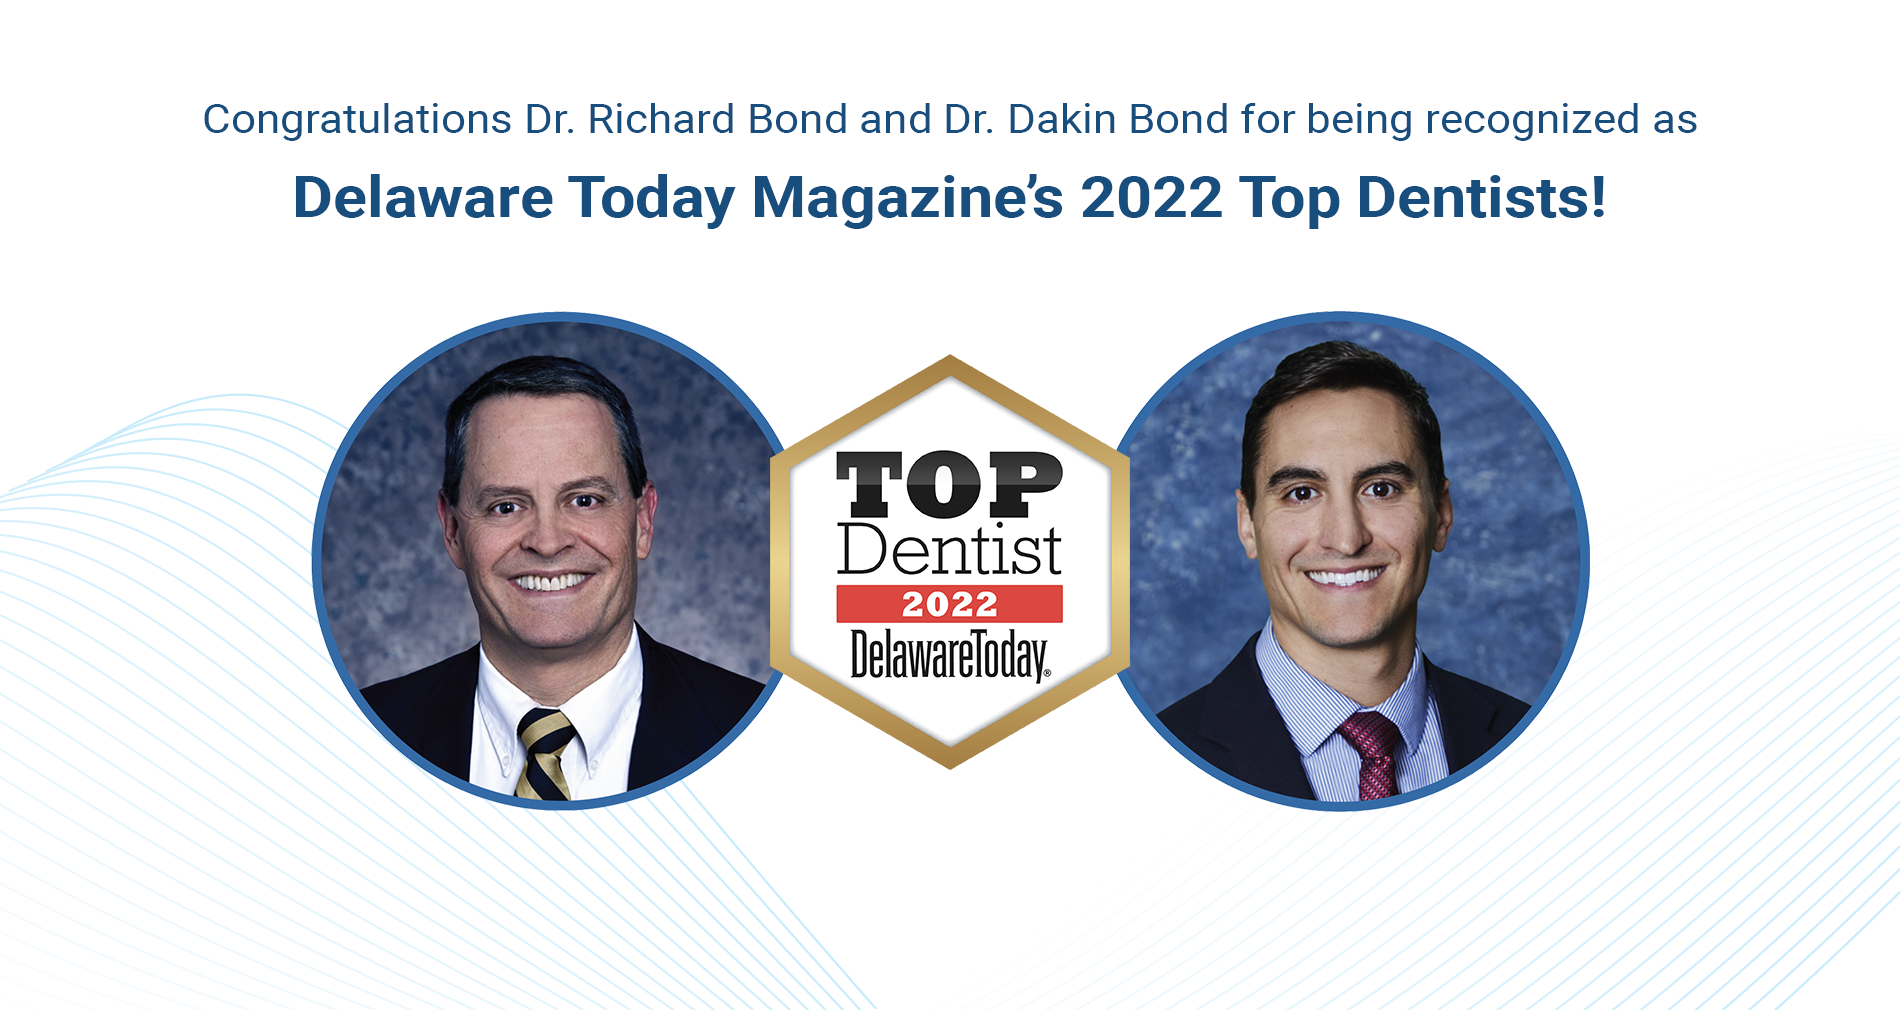 Delaware Today Magazine’s 2022 Top Dentists, Dr. Richard Bond and Dr. Dakin Bond